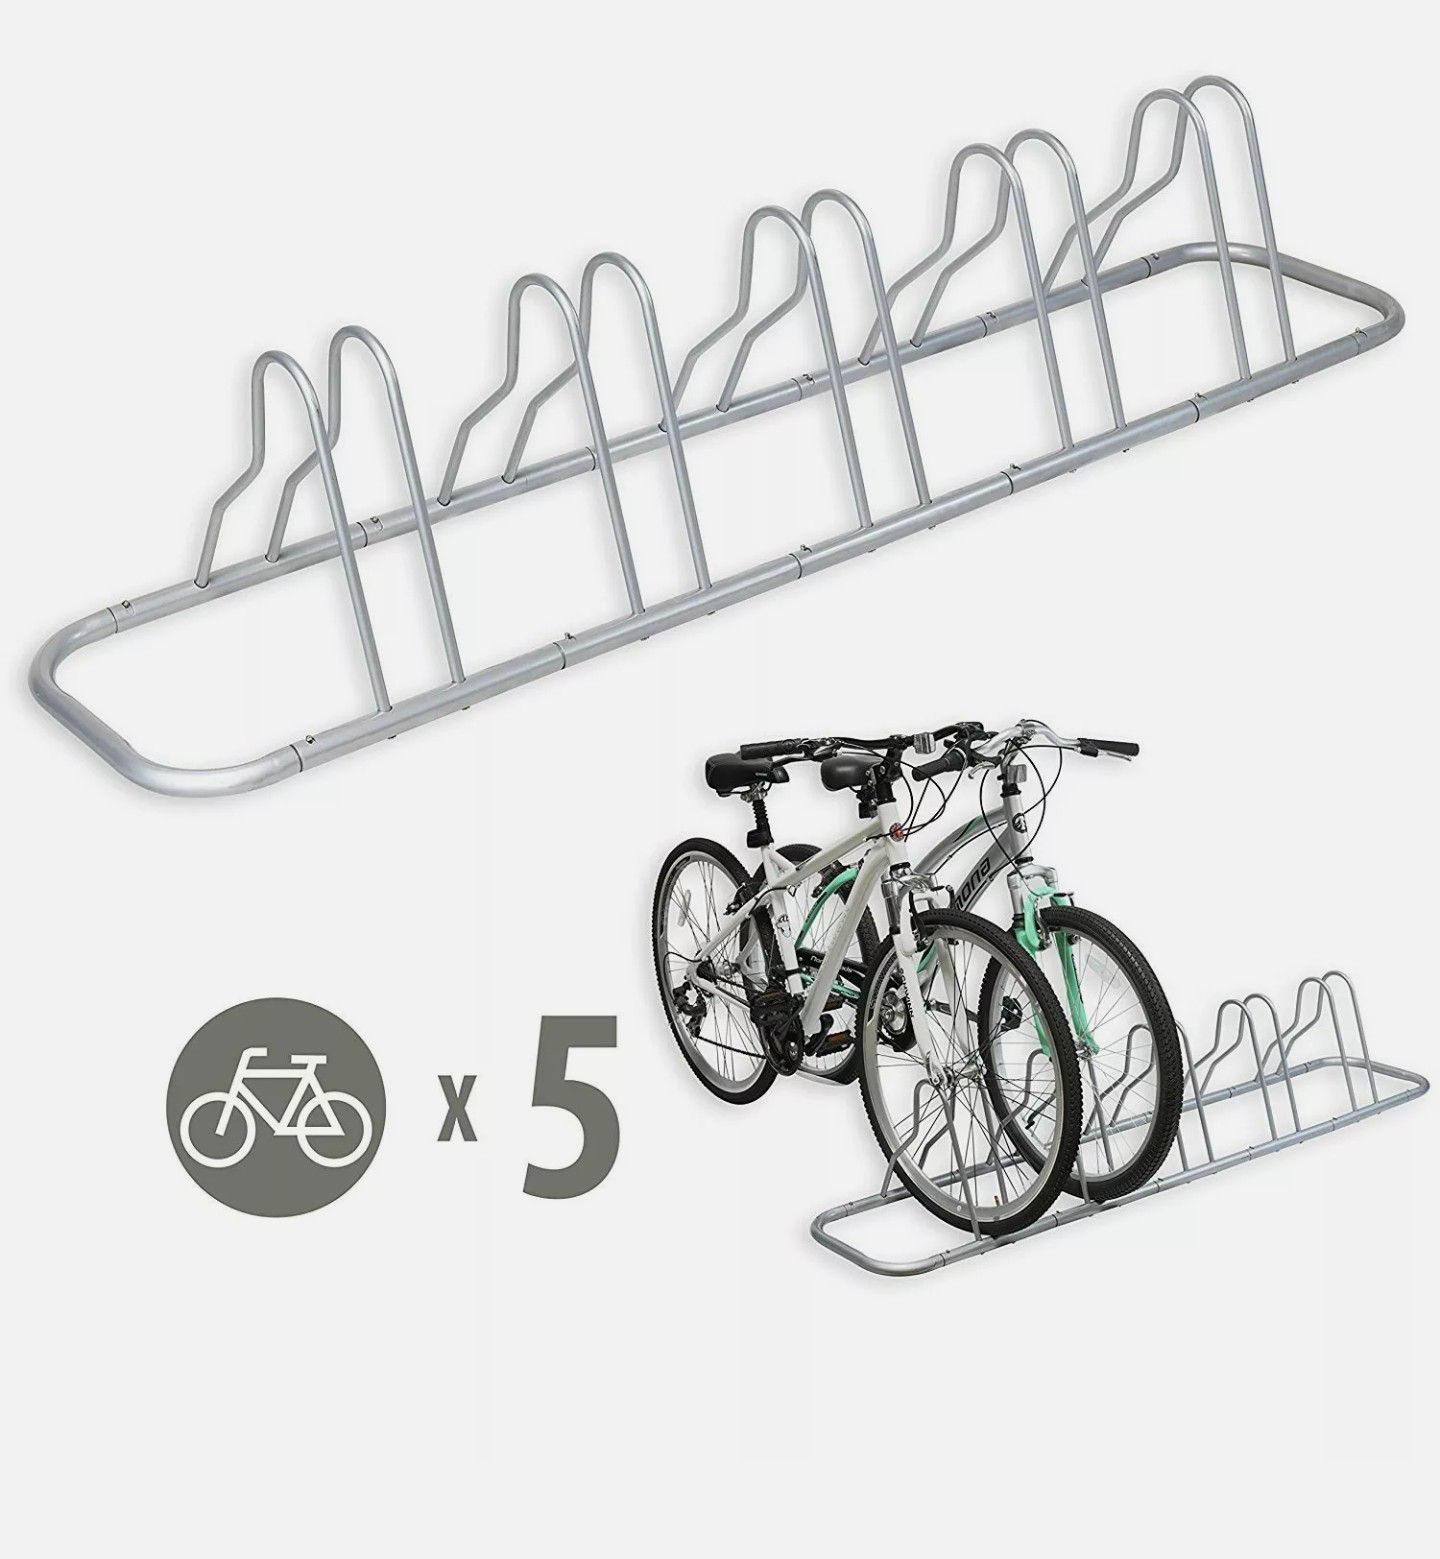 5 Bike Bicycle Rack Holder Stand Floor Parking Ground Stable Storage Garage Home